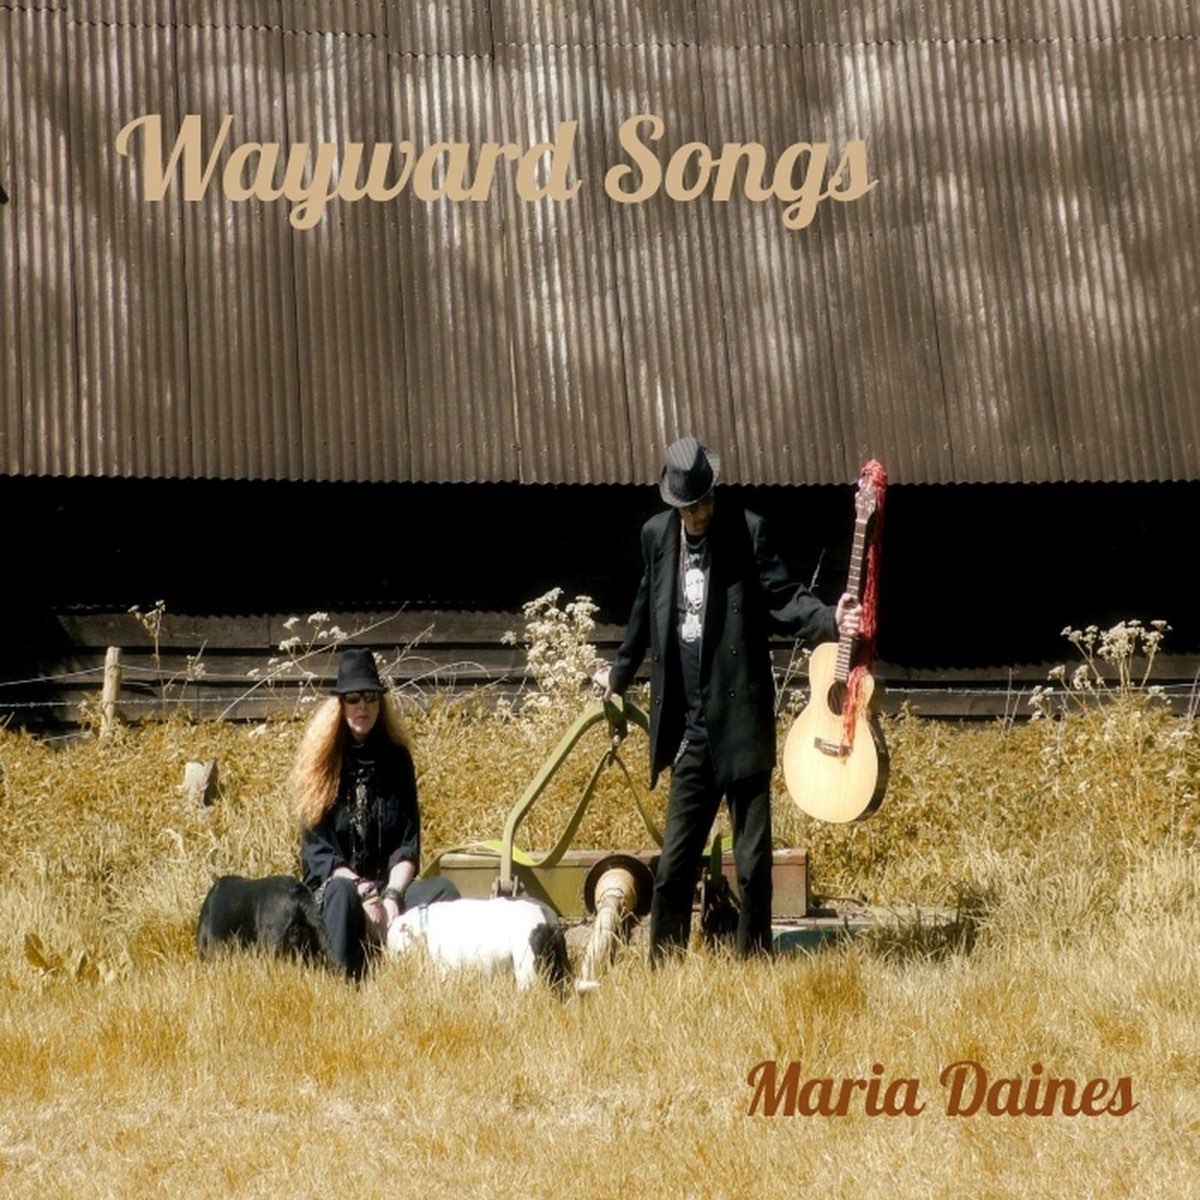 Maria song. Maria Daines - Wayward Songs (2015). Maria Daines альбомы. Maria Daines обложки CD.